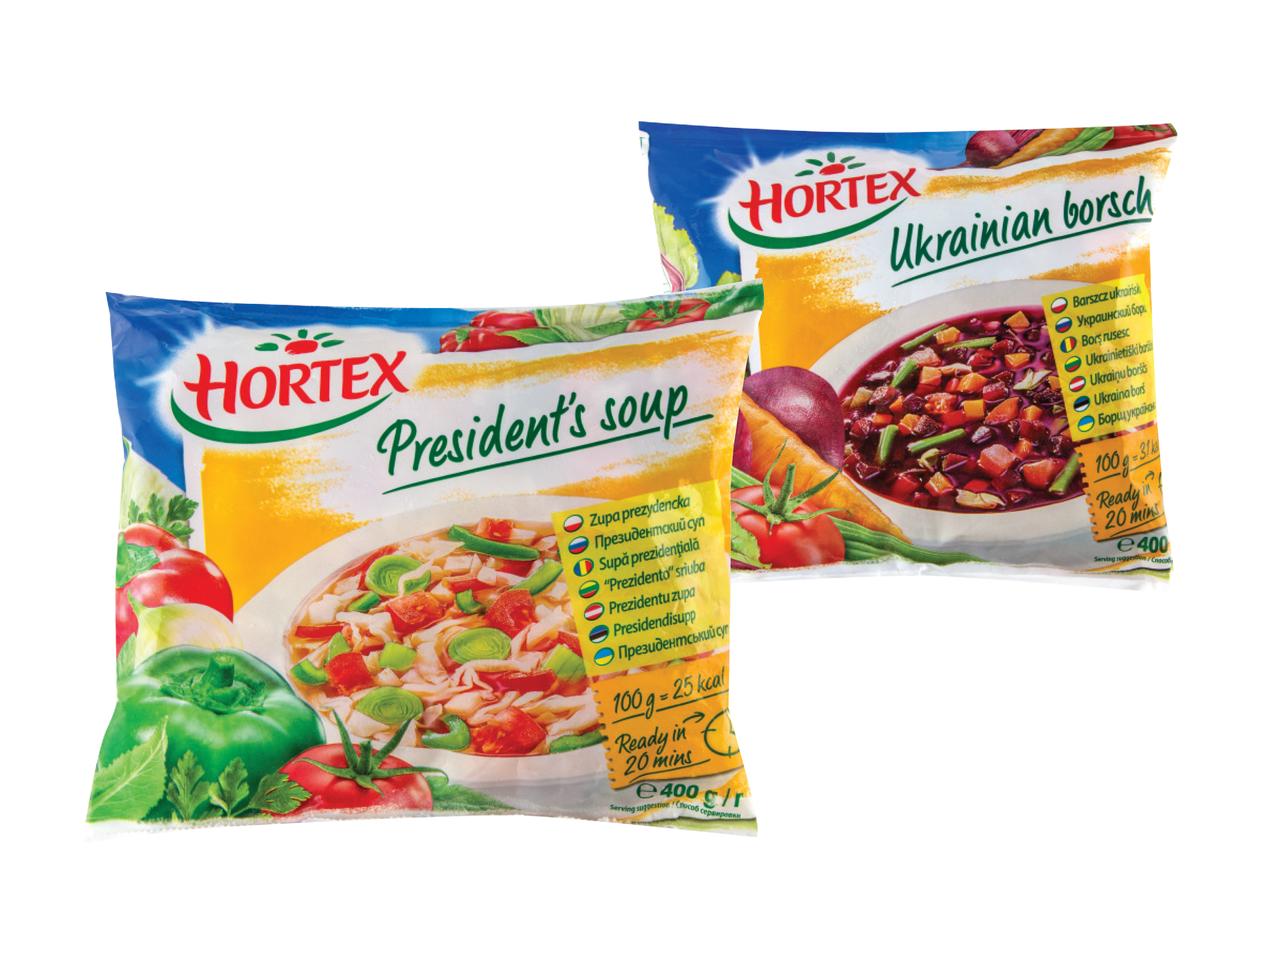 HORTEX President's/Ukrainian Borsch Soup